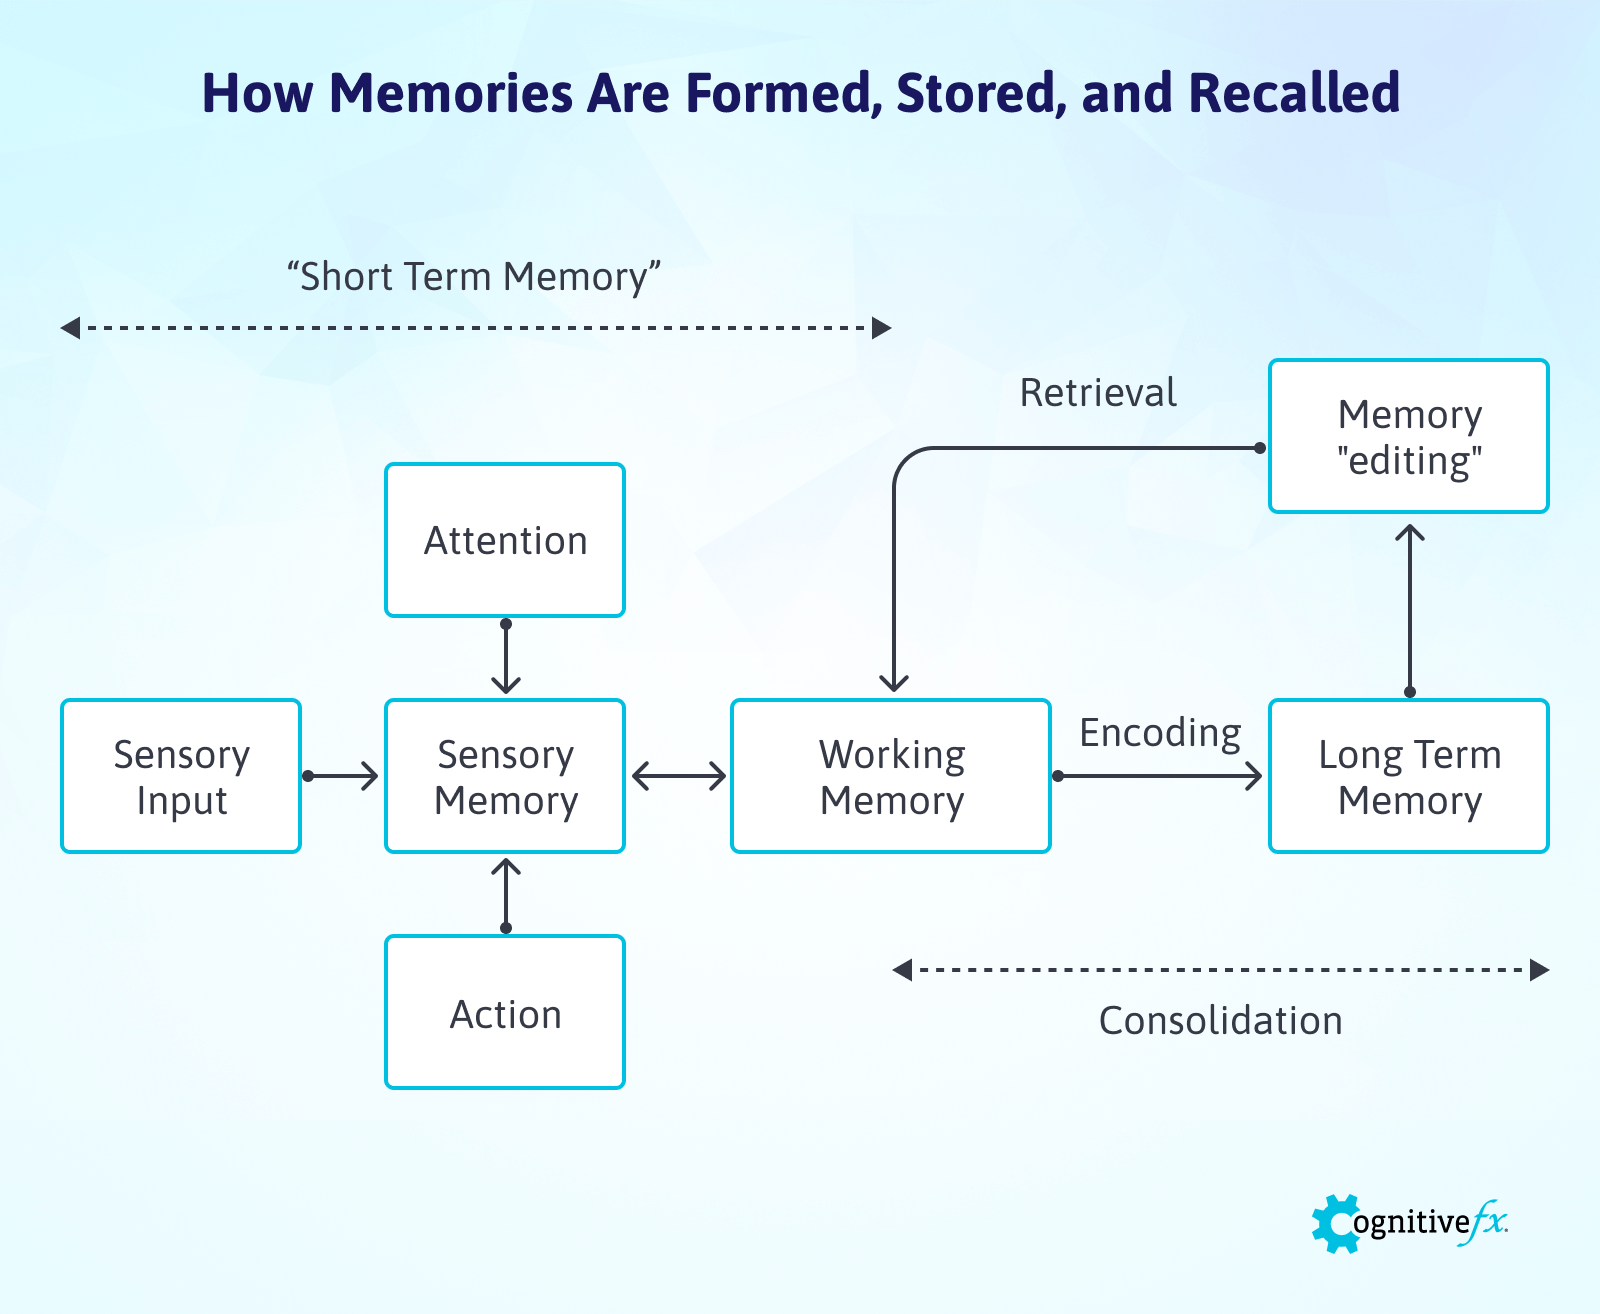 Short term memory deals with sensory memory and working memory and long term memory deals with consolidating working memory.